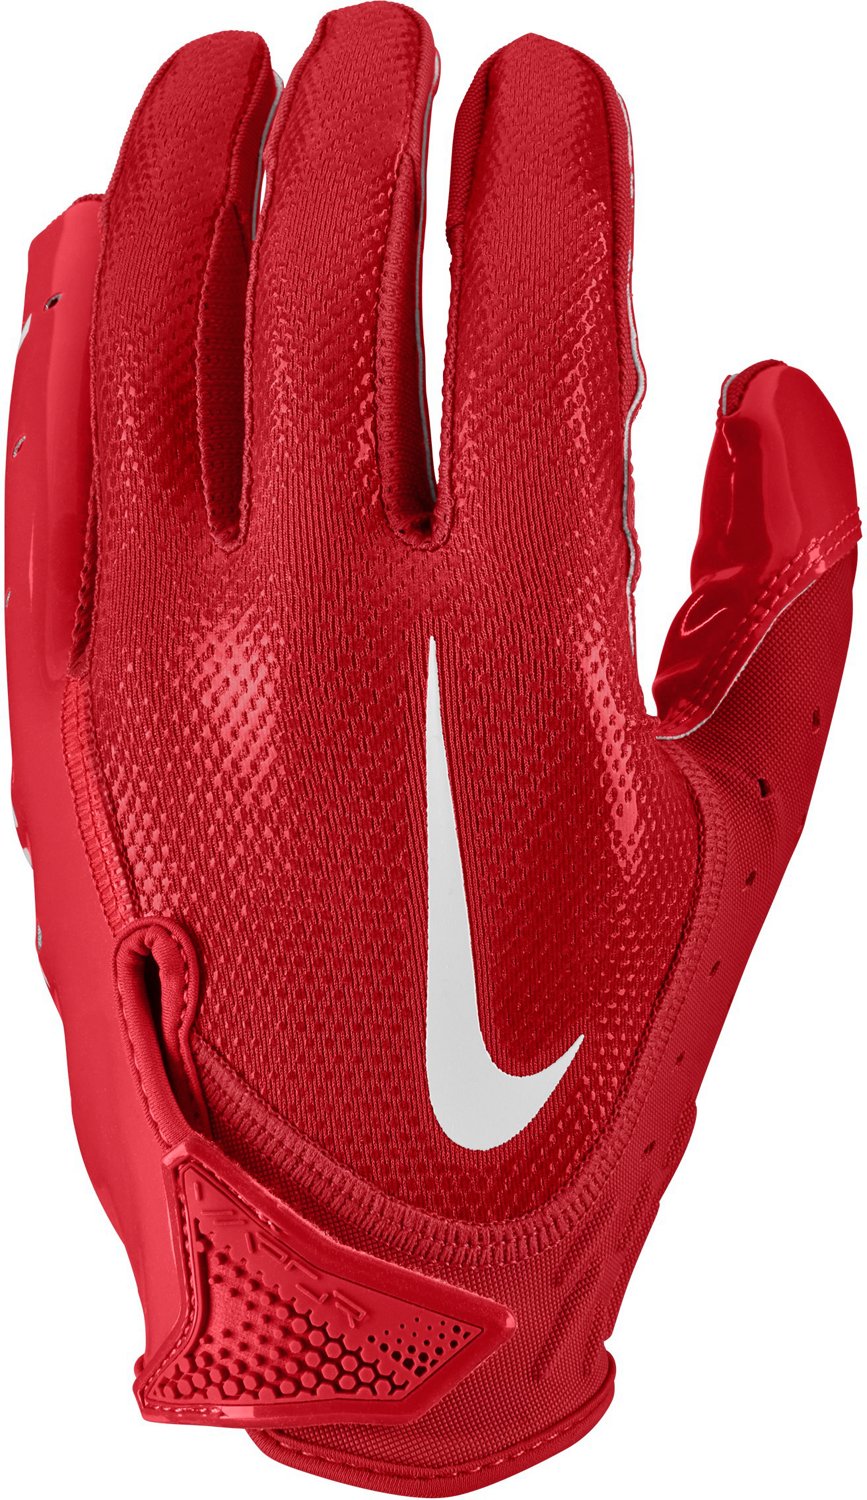 Nike Adults Vapor Jet 7.0 Football Gloves